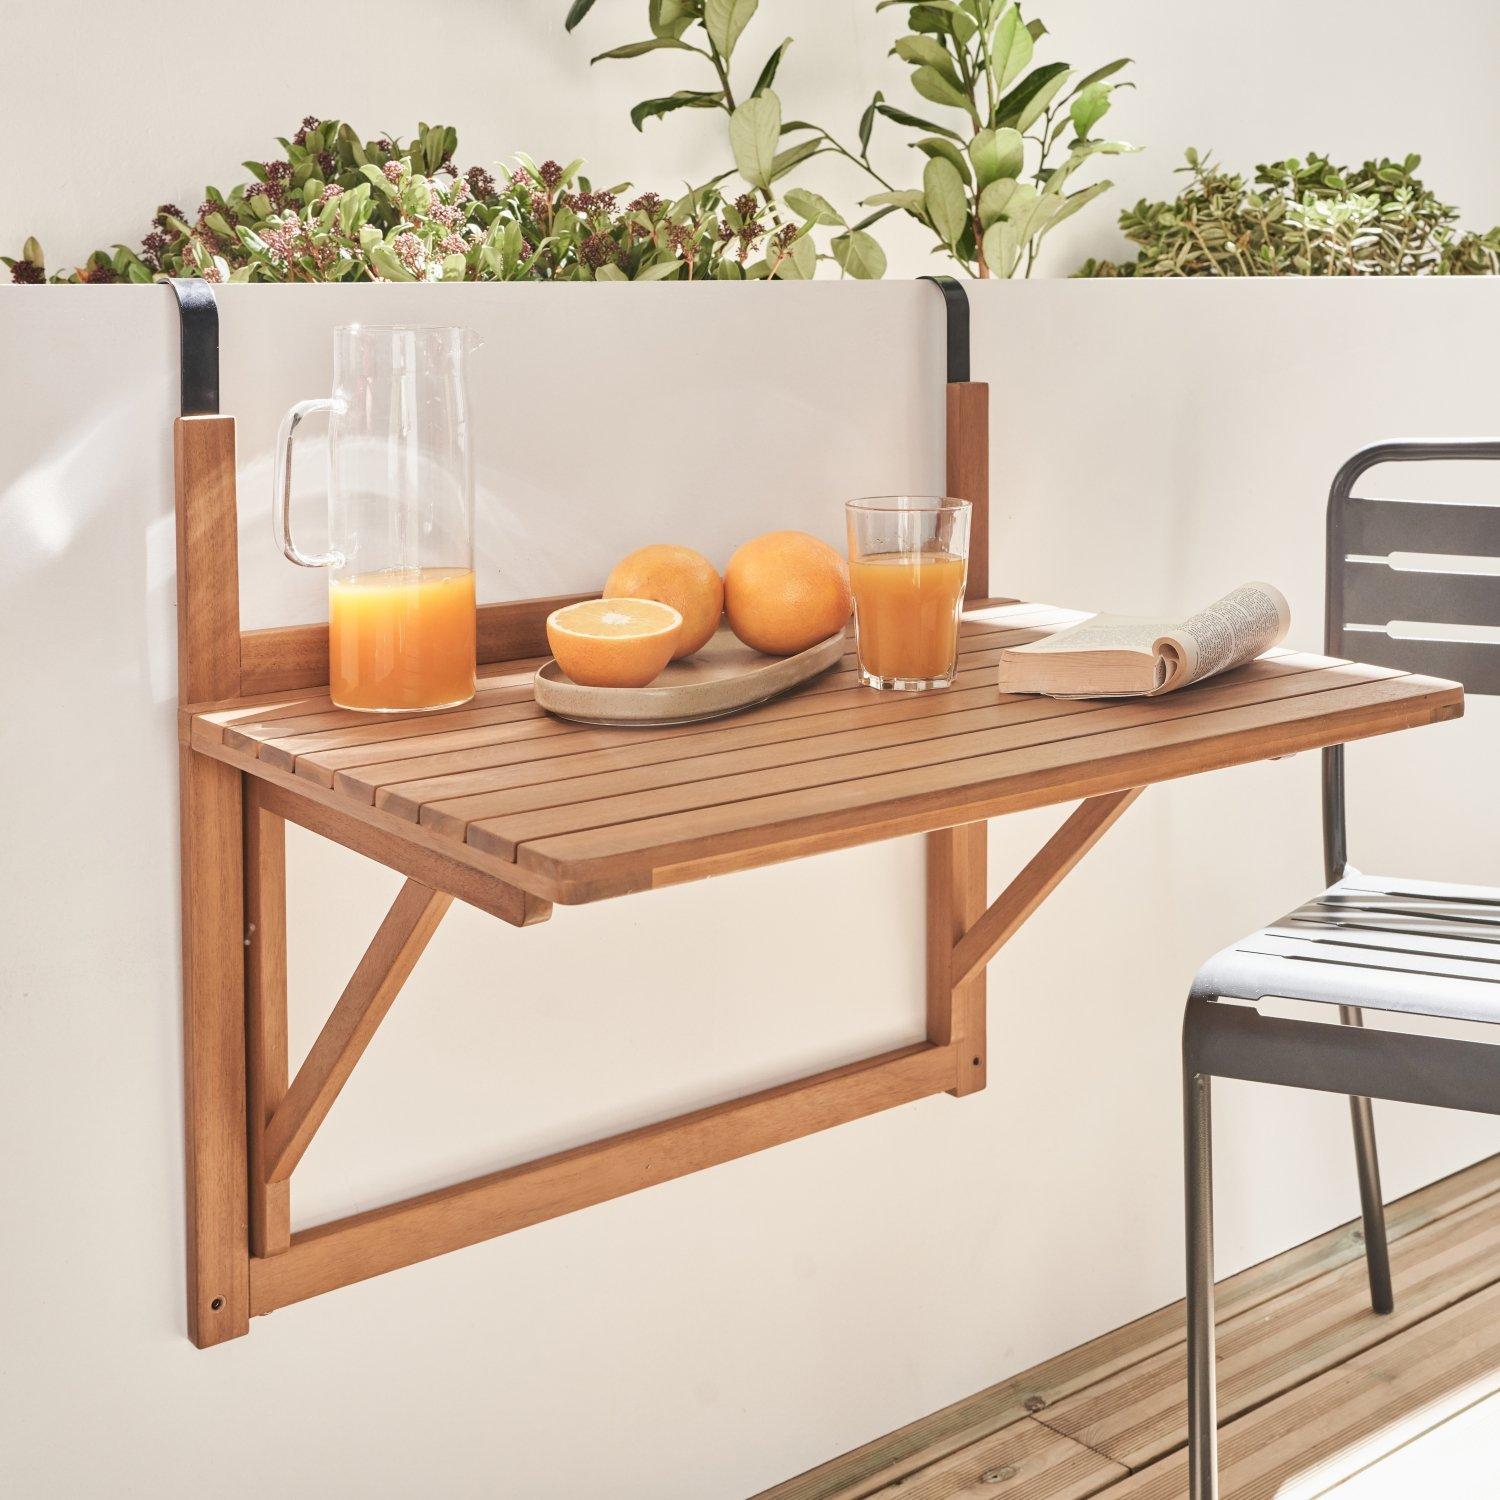 Wooden Side Table For Balcony Rectangular Foldable